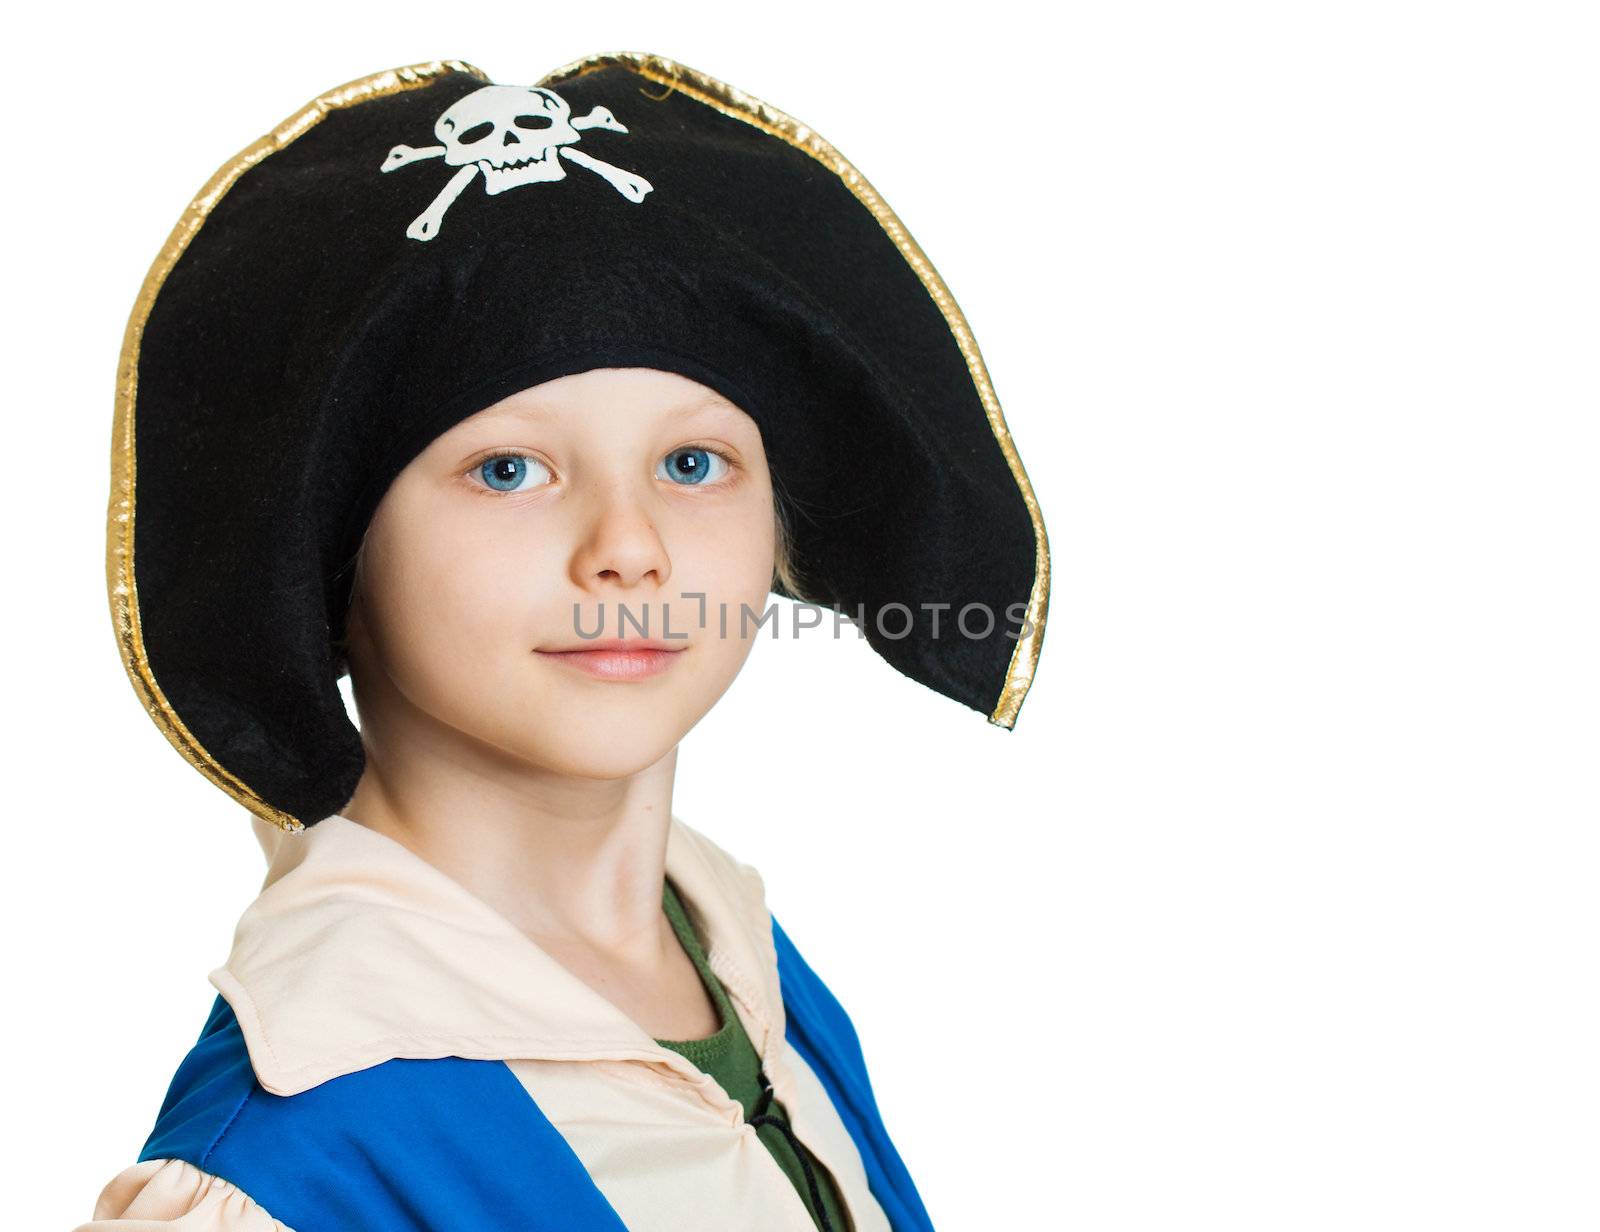 Boy dressed as pirate by Jaykayl